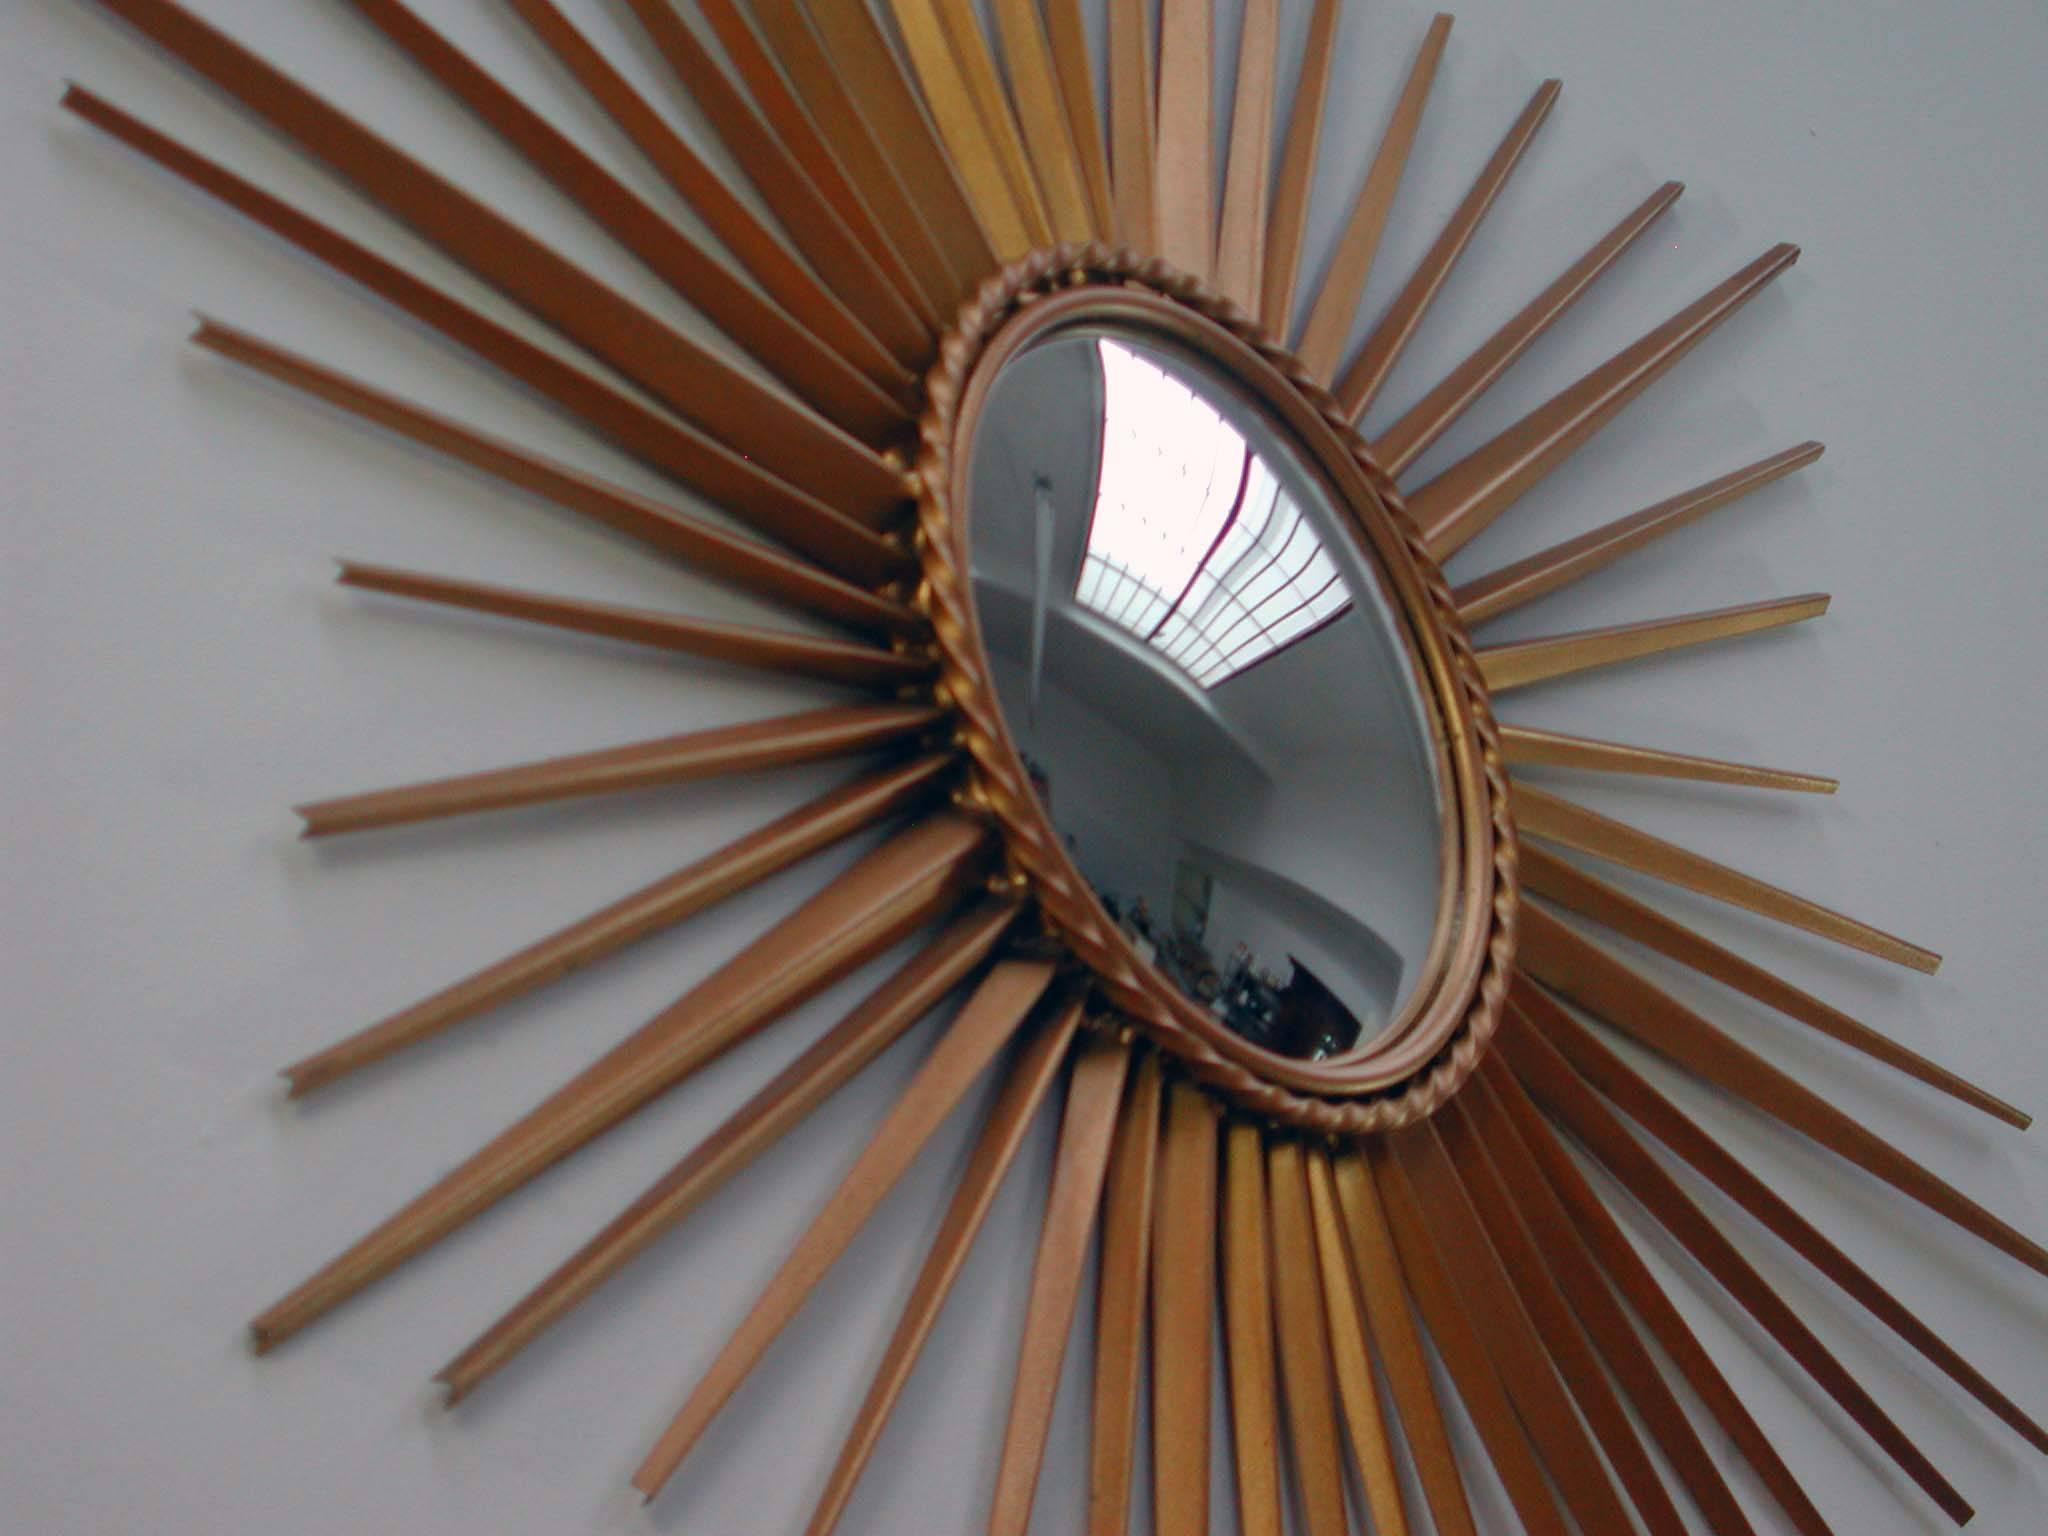 Mid-Century Modern French Chaty Vallauris sunburst starburst gilt wall mirror with convex mirror glass.
Measure: Total diameter 30.75